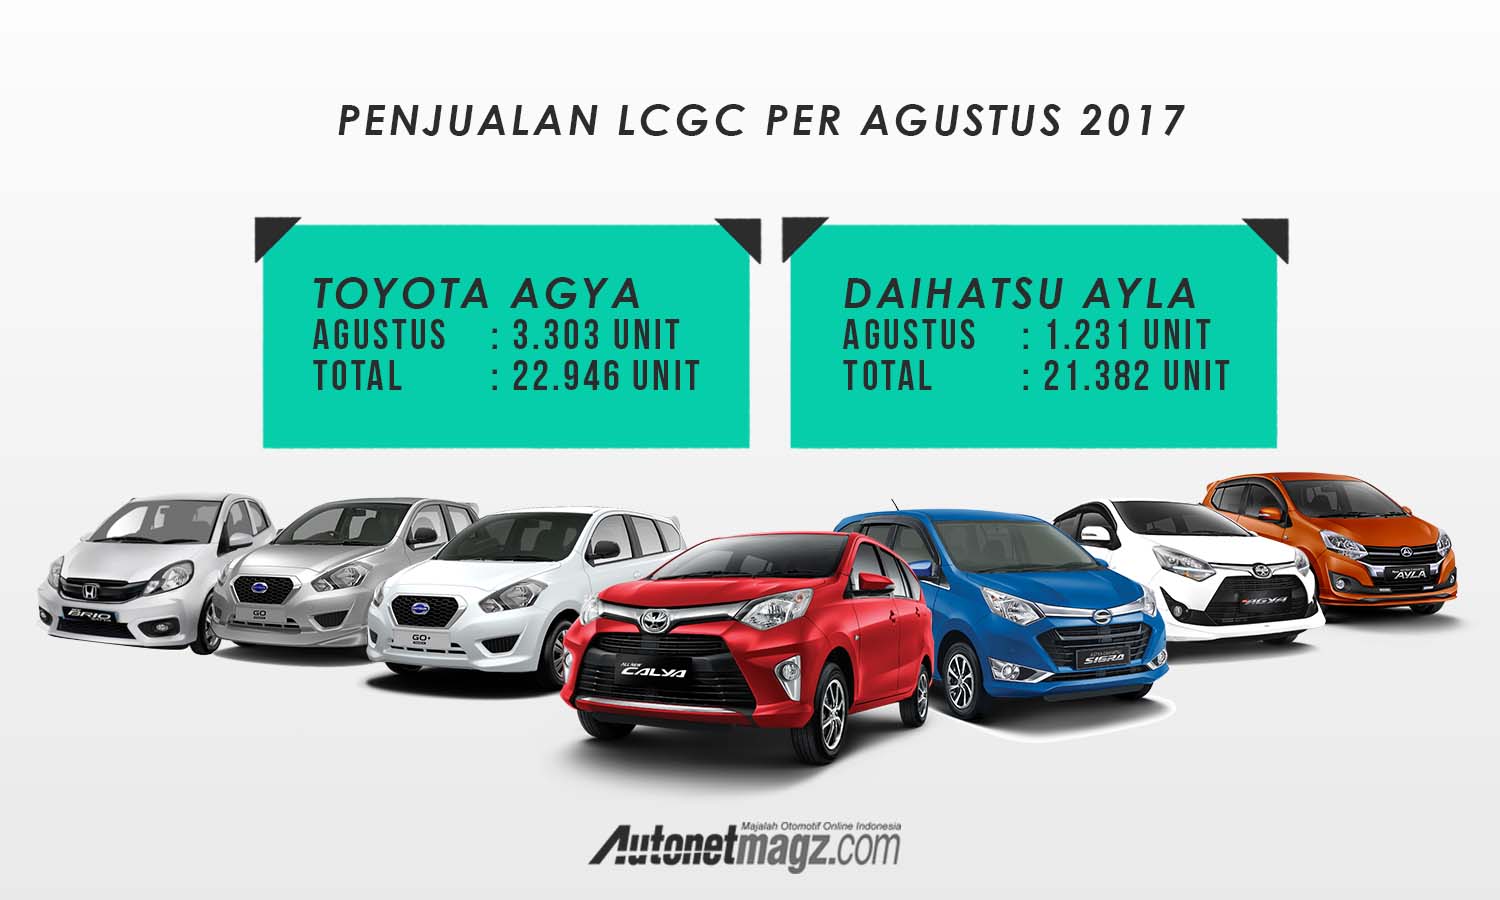 Berita, Penjualan LCGC Agustus 2017 – 2: Dinamika LCGC 2017 : Calya Merajai, Karimun Posisi Terakhir